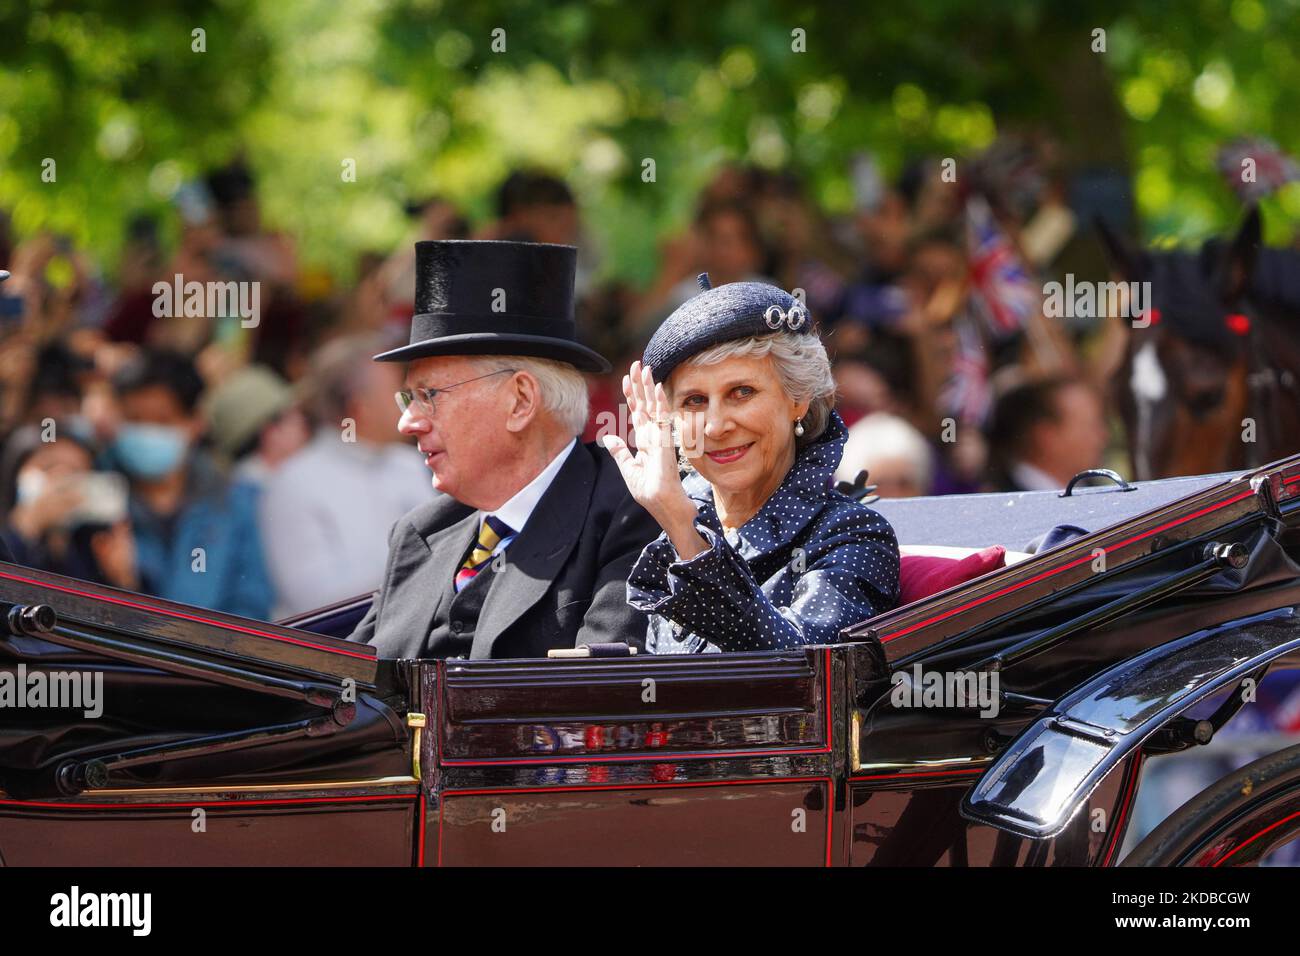 Prince Richard, duque de Gloucester y Birgitte, duquesa de Gloucester que asiste al desfile del jubileo de platino de la reina. (Foto de Alexander Mak/NurPhoto) Foto de stock